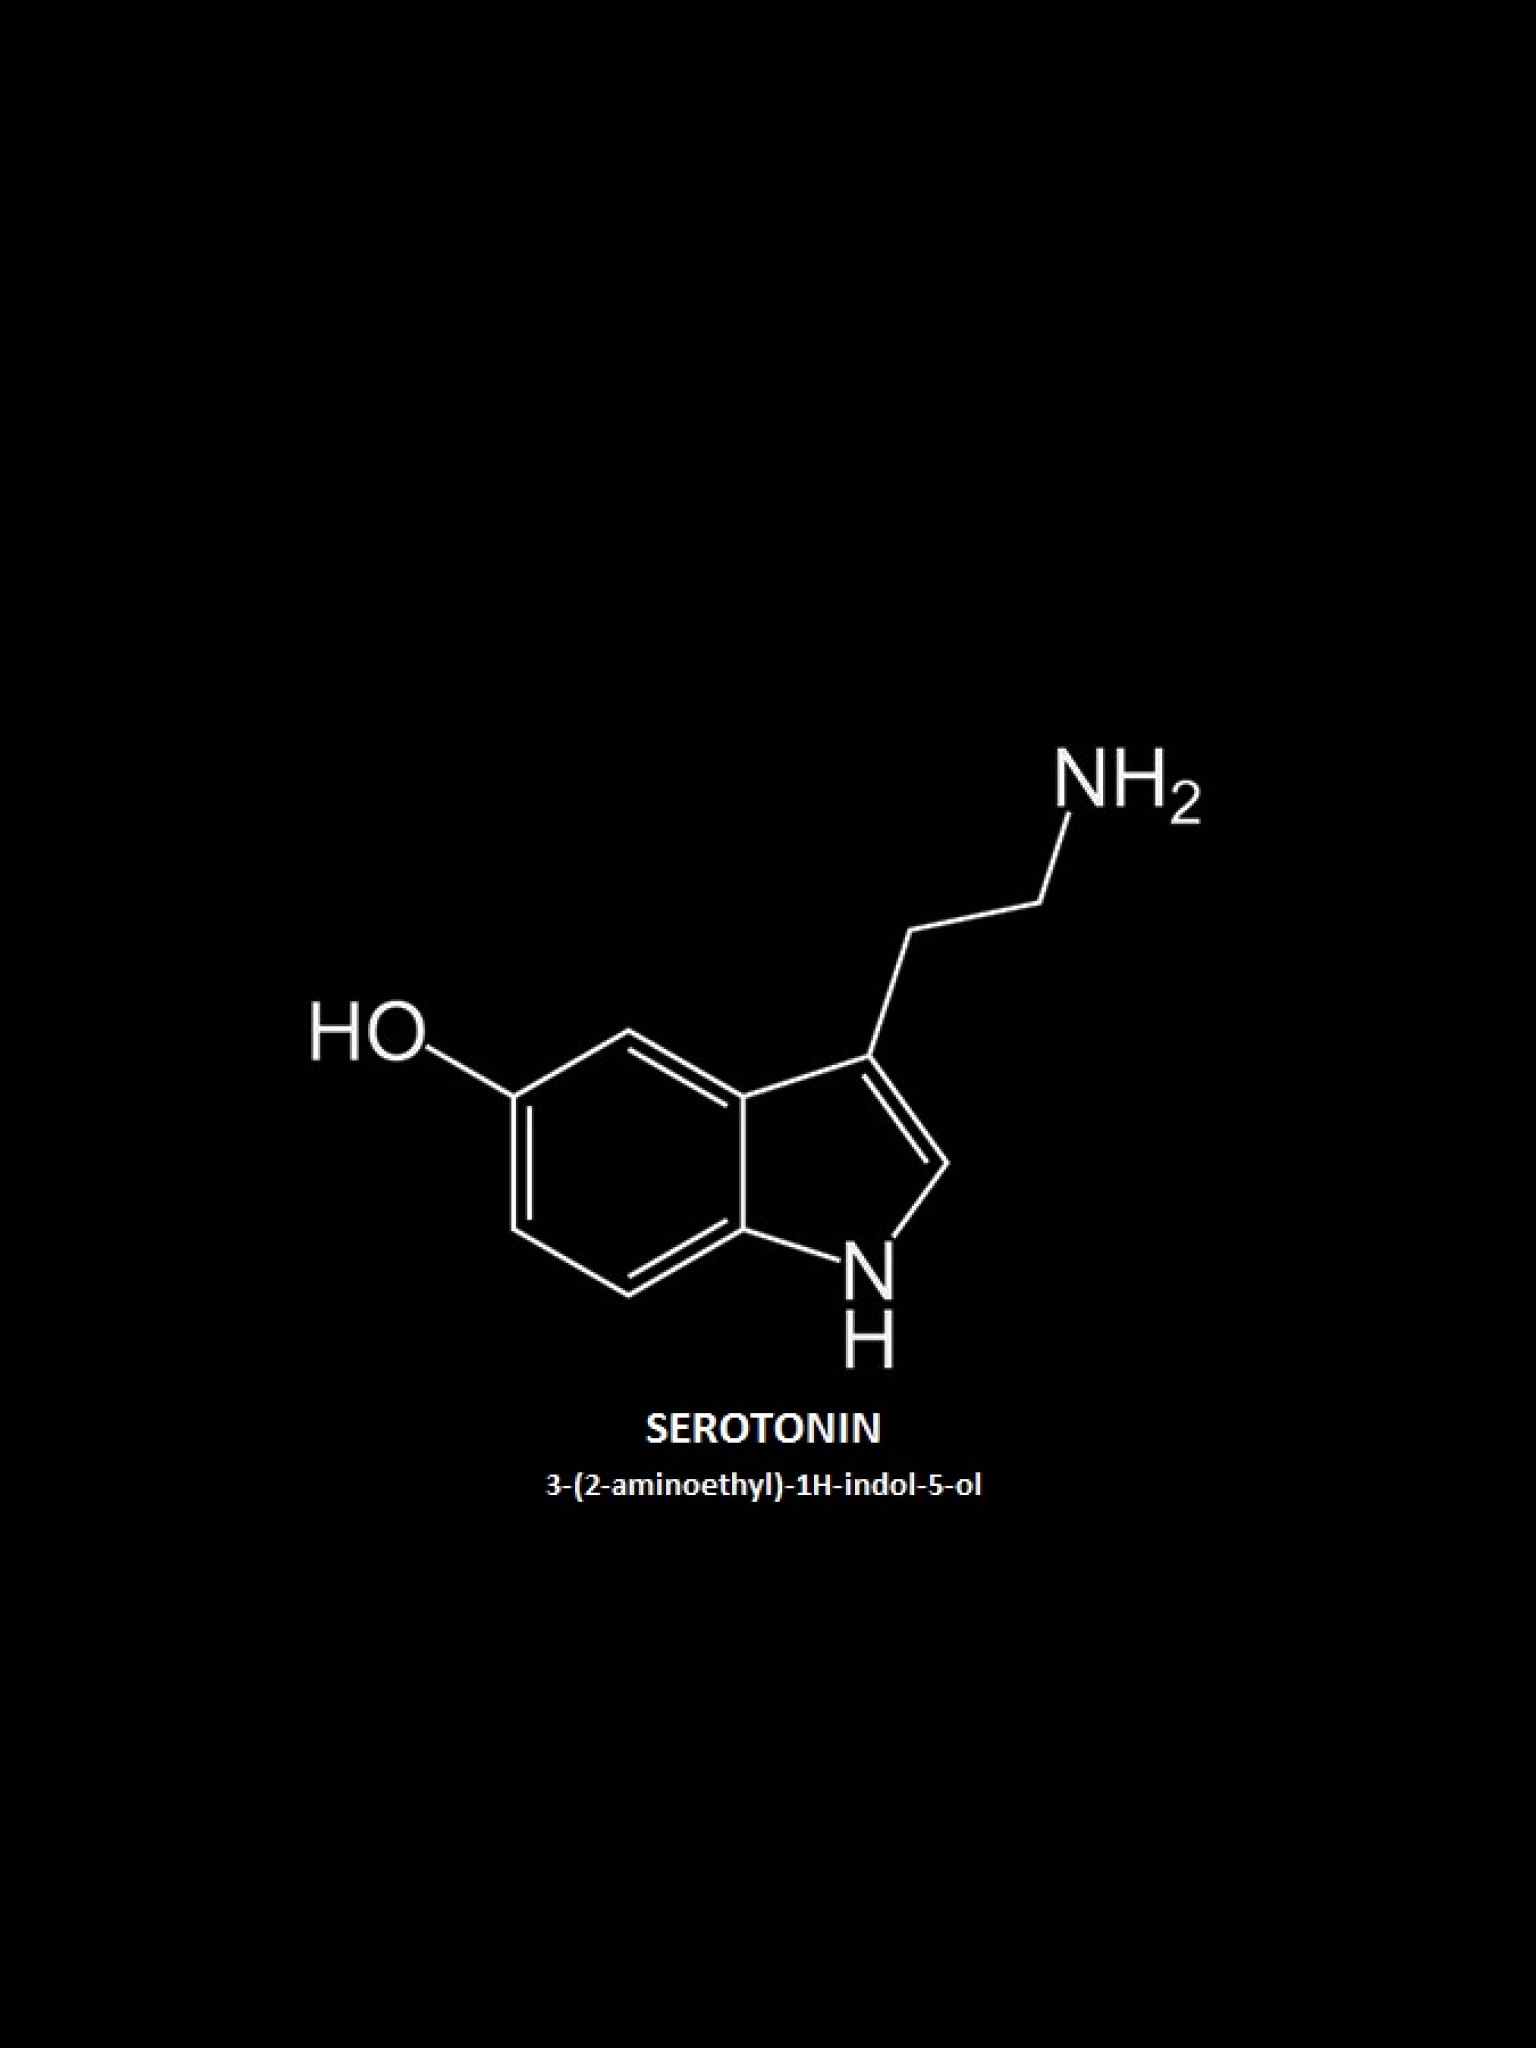 Формула эндорфина. Химическая формула серотонина. Дофамин гормон формула. Молекула серотонина формула. Химическая формула эндорфина.